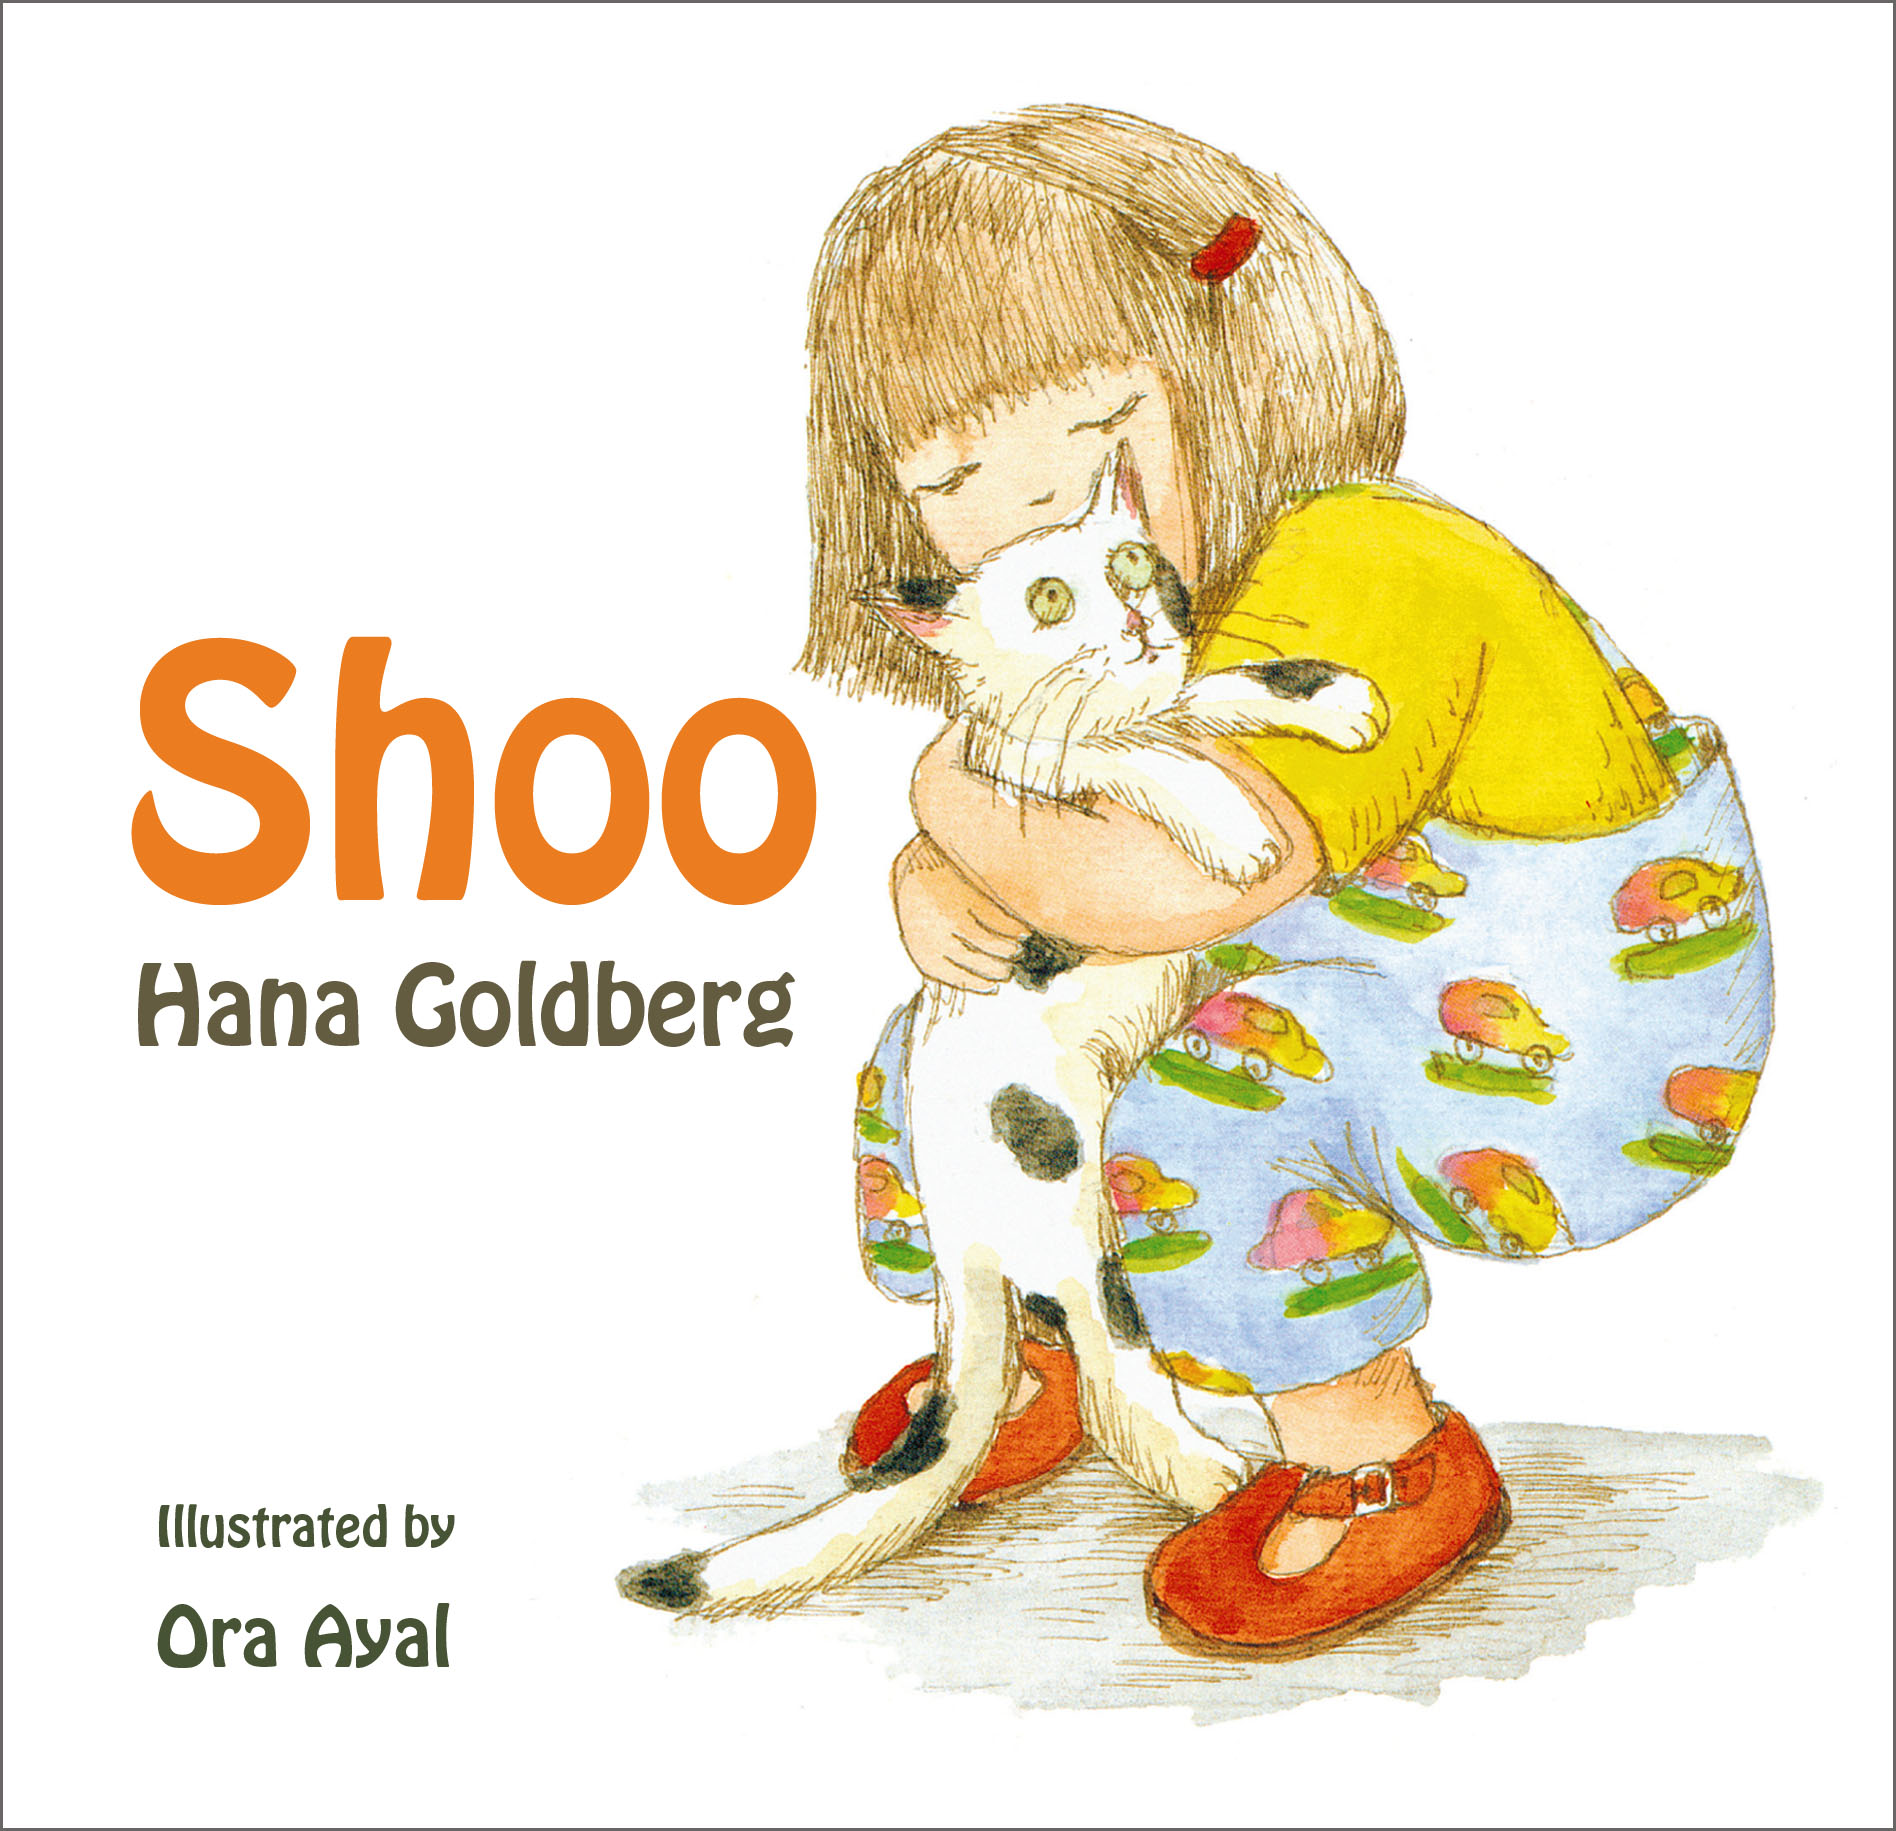 FREE: Children’s Book: Shoo: (Ages 1-8) by Hana Goldberg